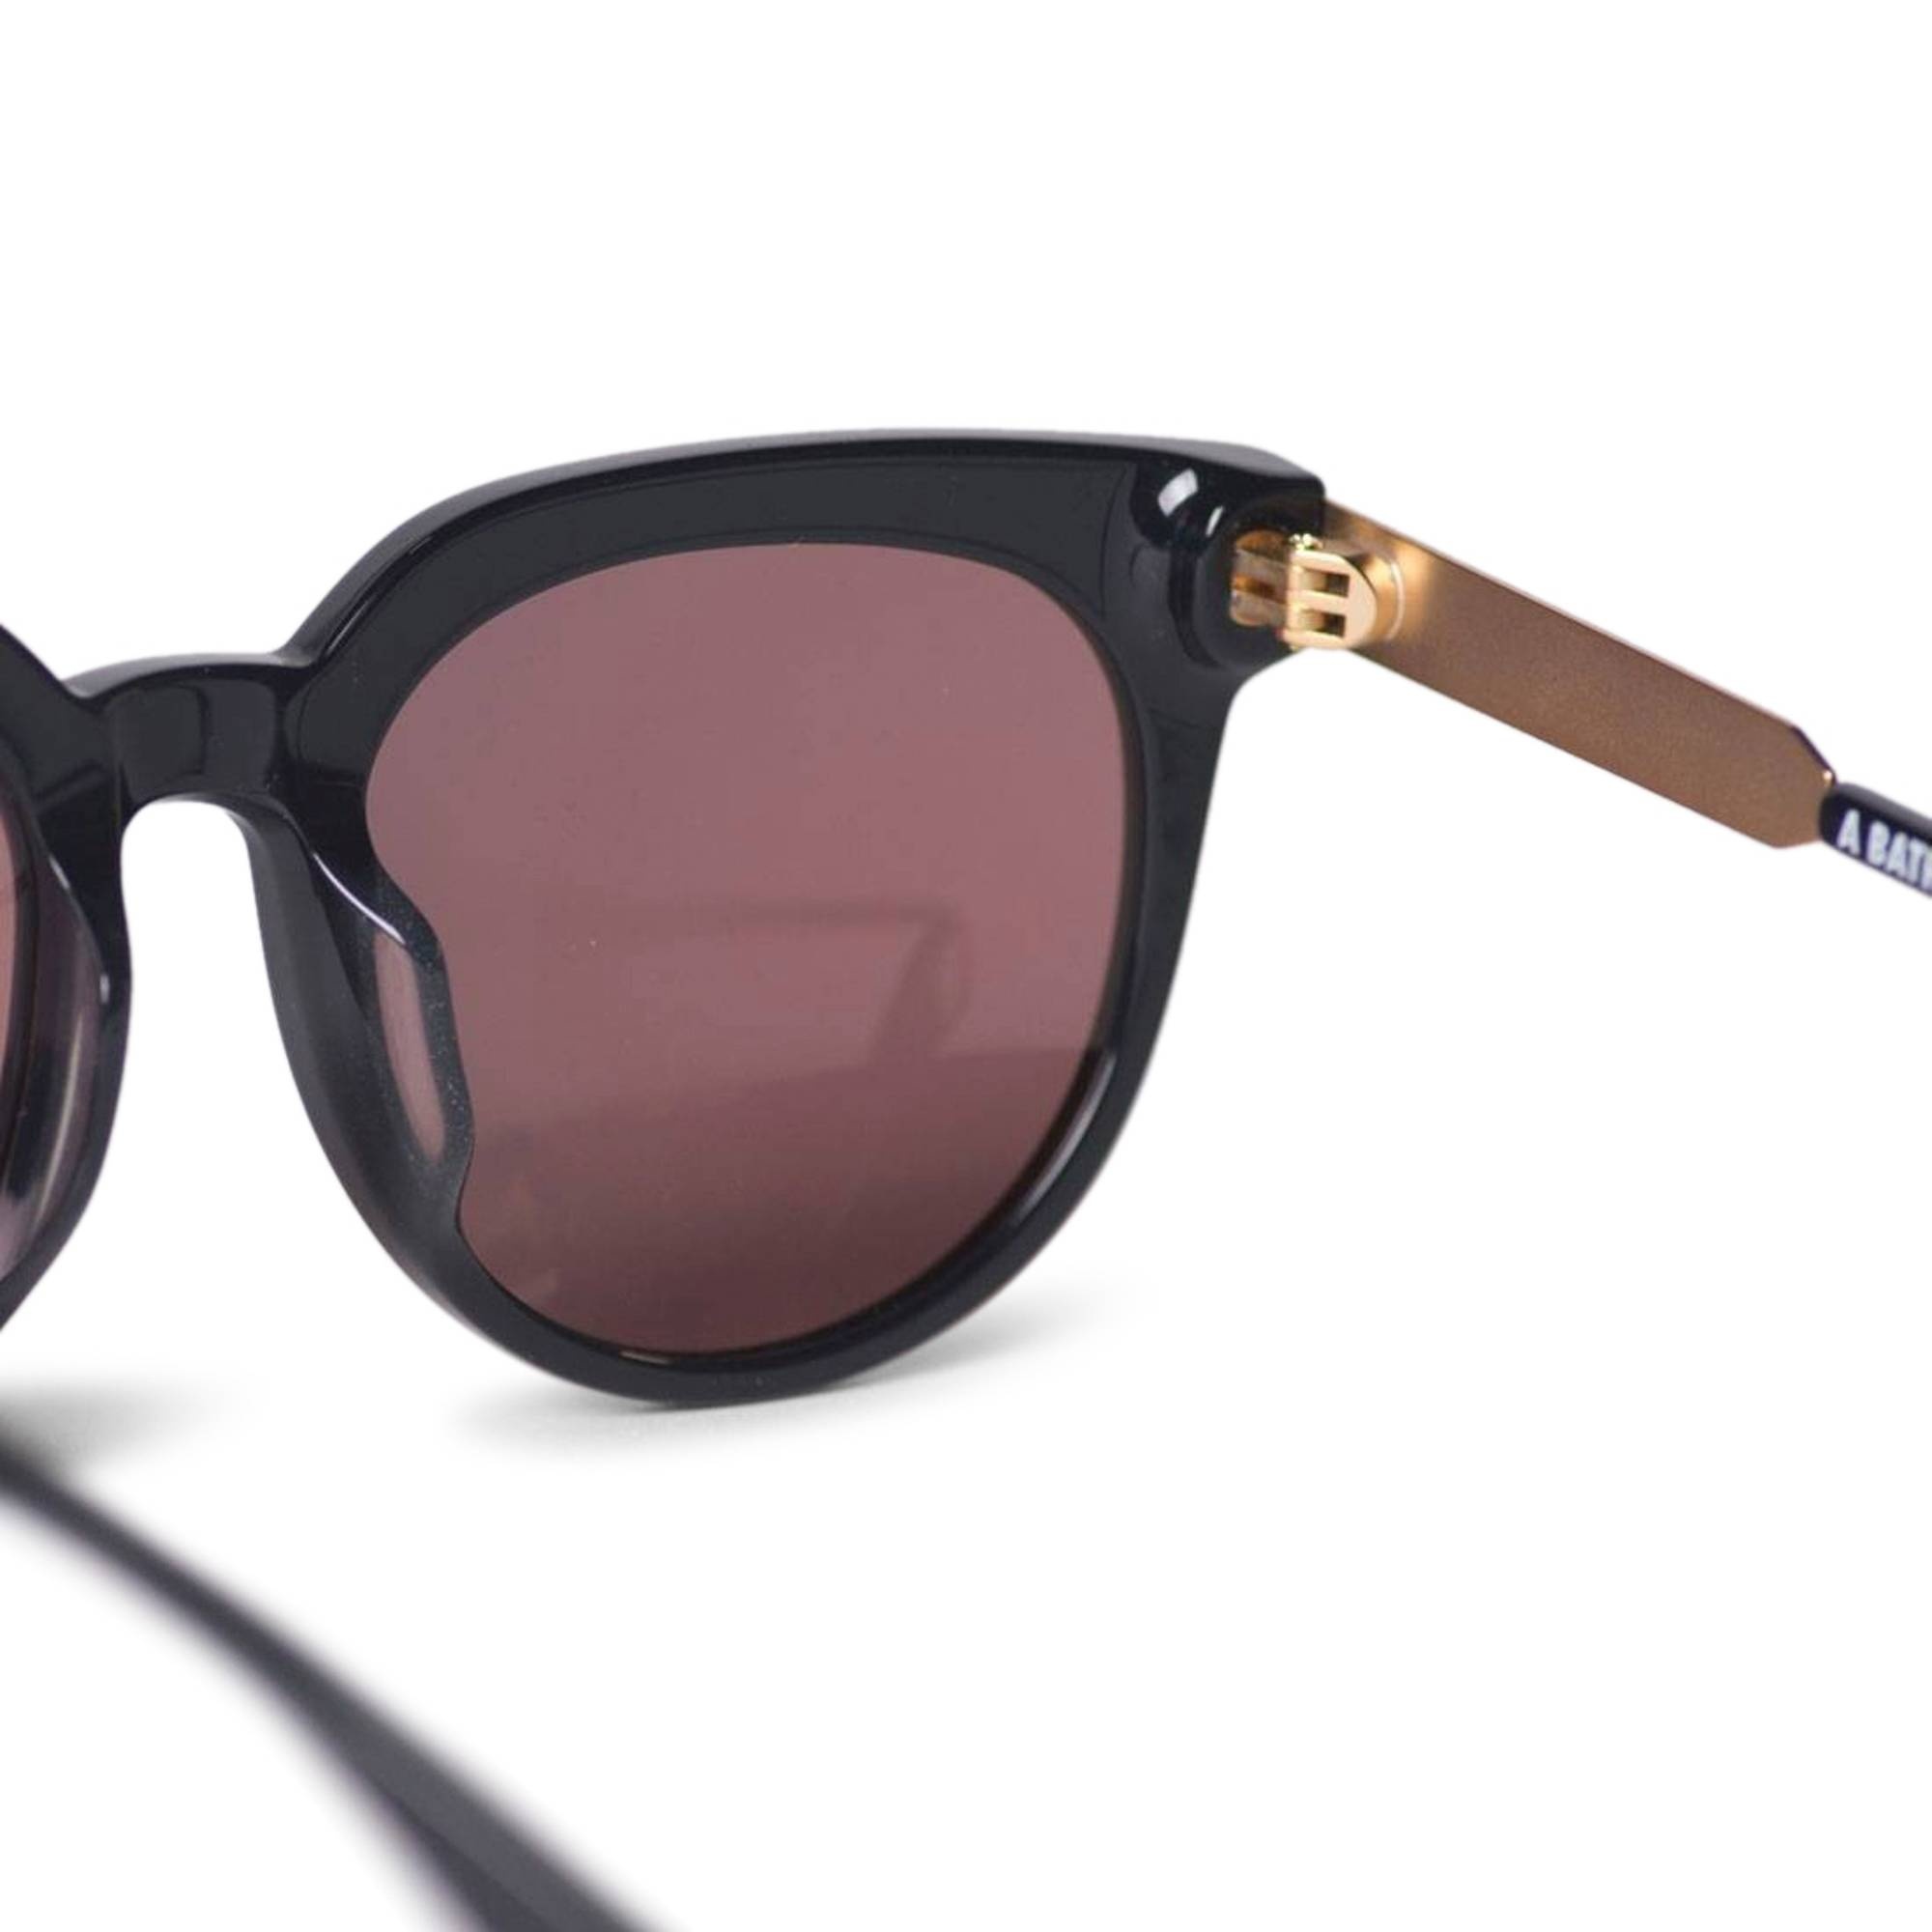 BAPE Sunglasses 'Black' - 3